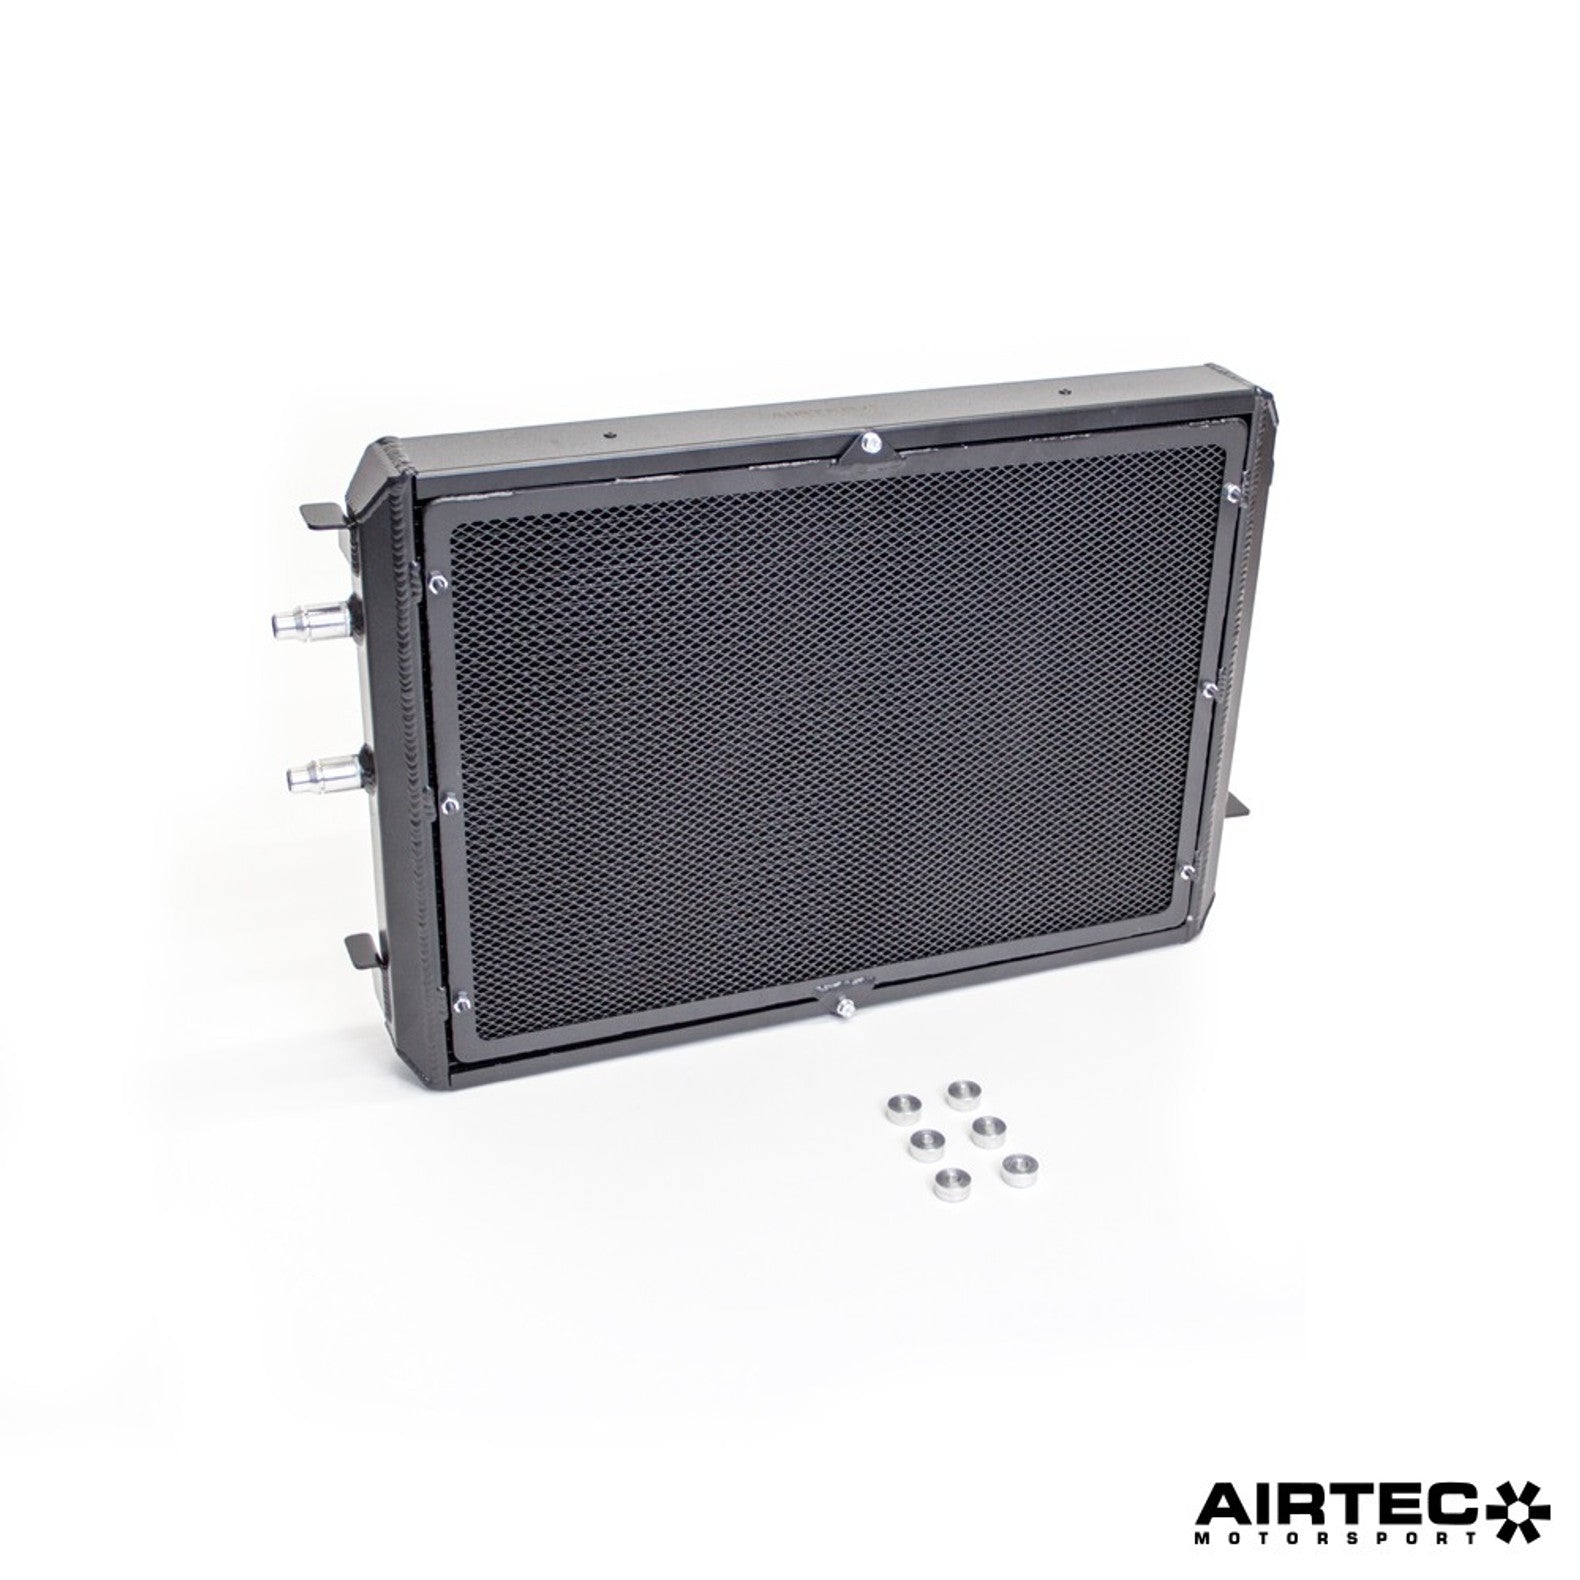 Airtec Motorsport Chargecooler Radiator 